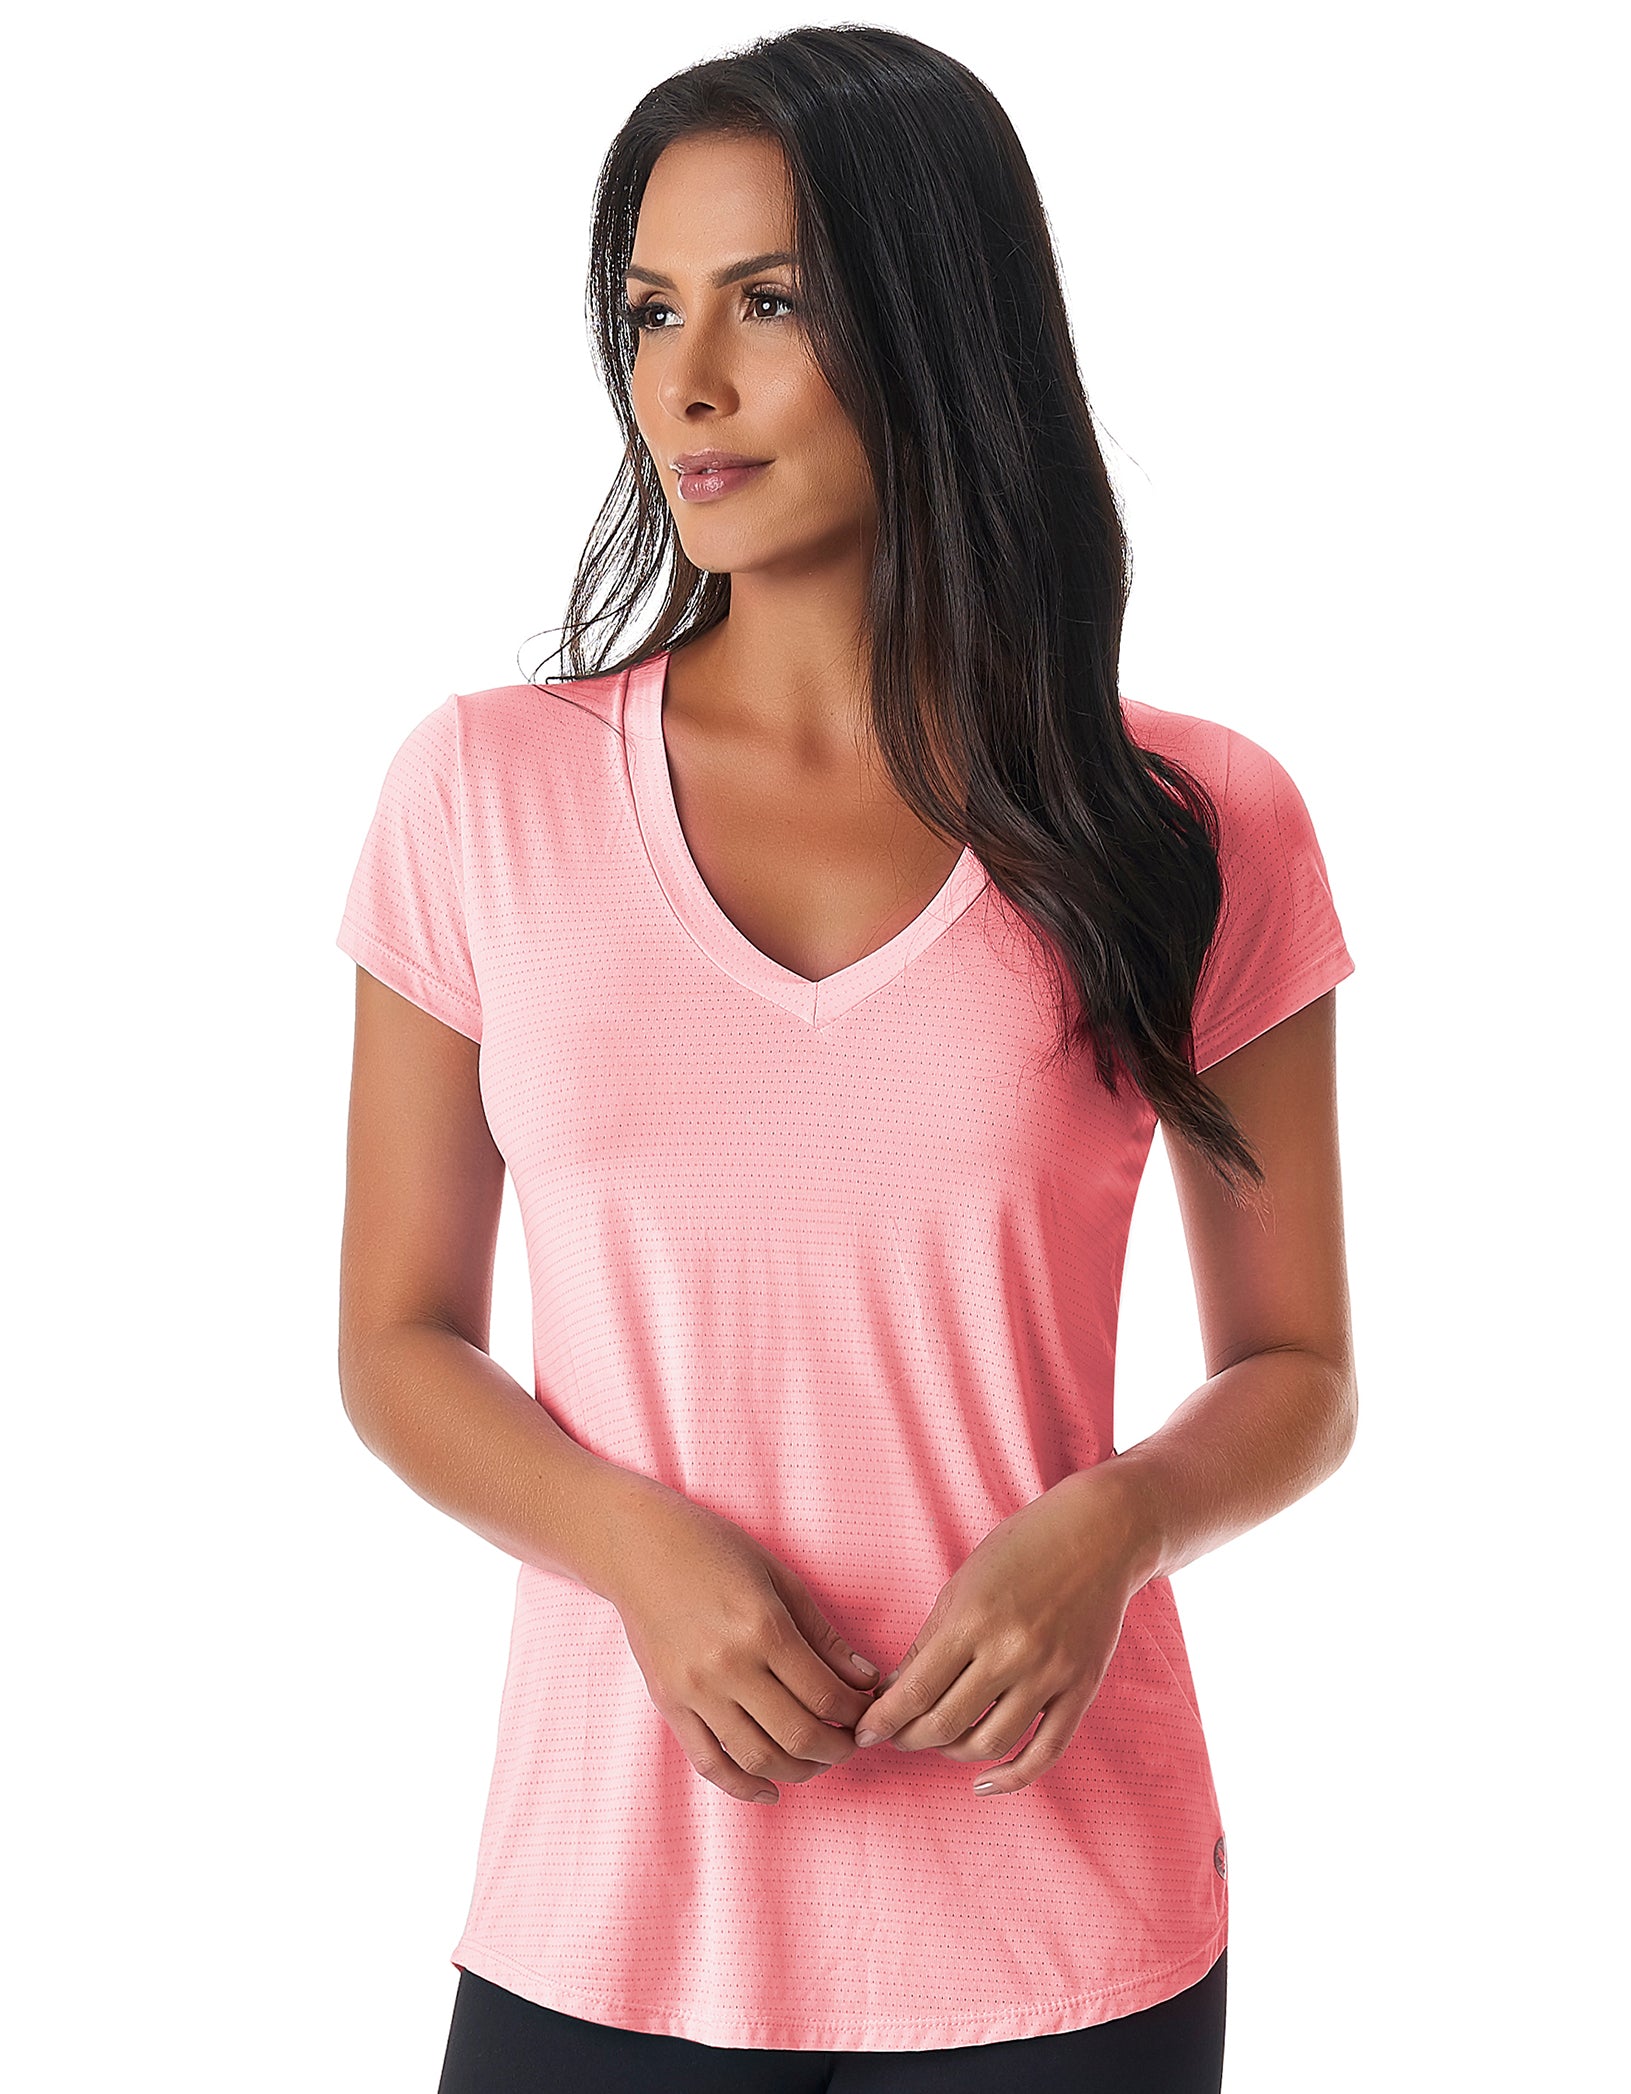 Vestem - Shirt Dry Fit Short Sleeve Janice Coral Neon Orange - BMC31C0247